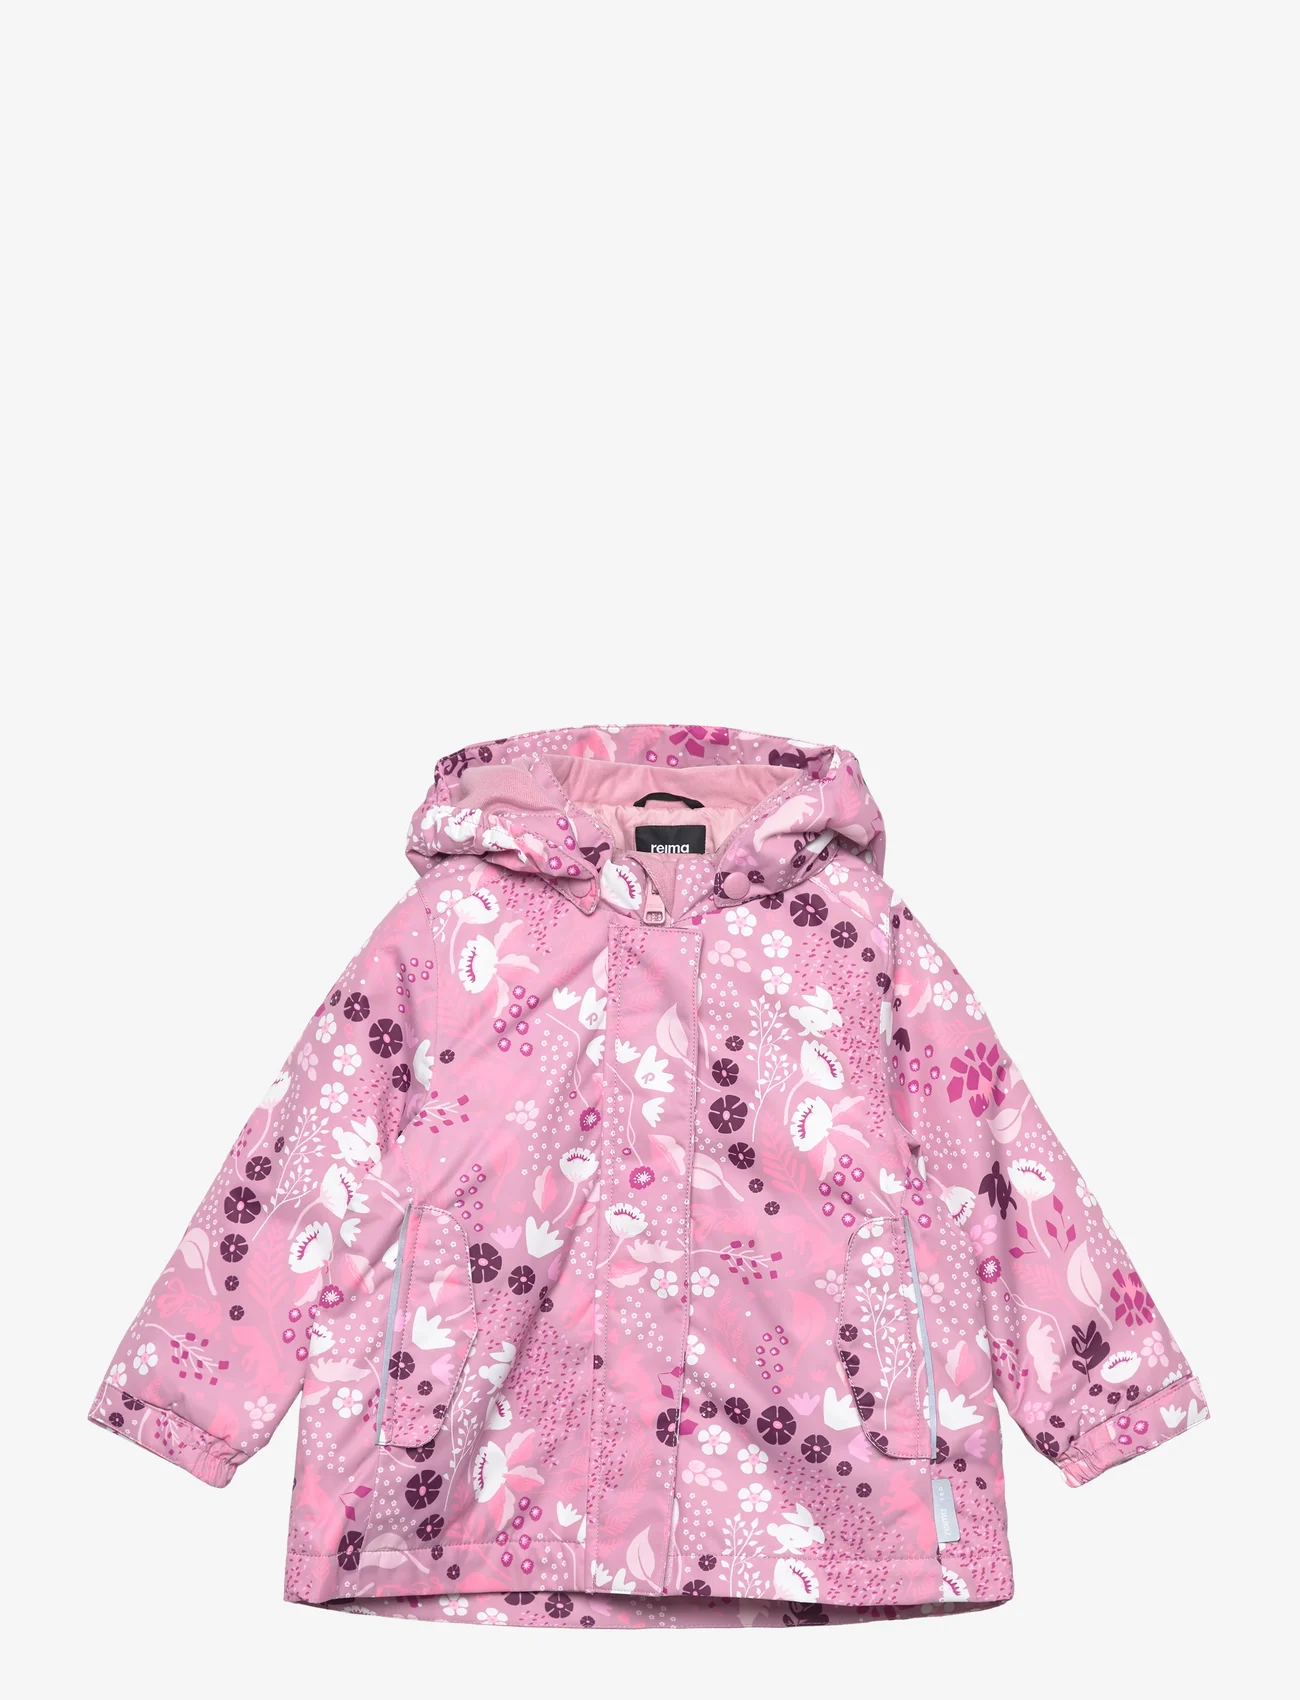 Reima - Toddlers' winter jacket Kuhmoinen - shell virsjakas - grey pink - 0